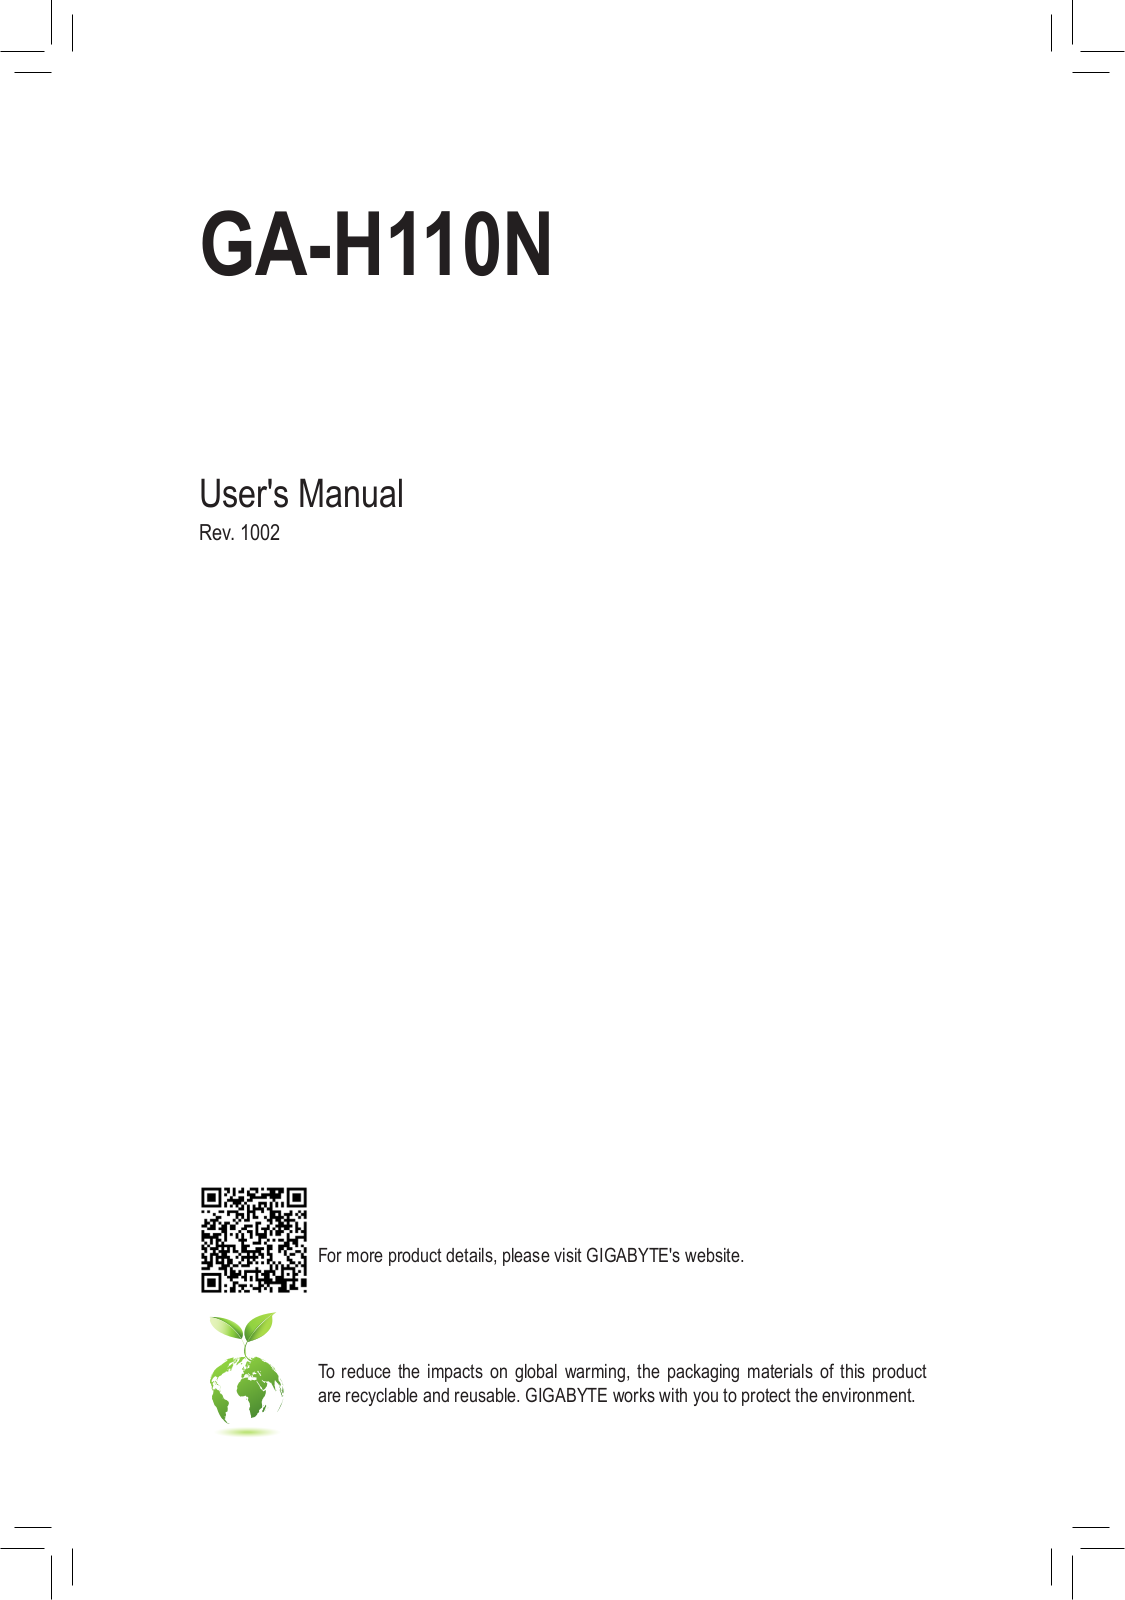 Gigabyte GA-H110N Service Manual